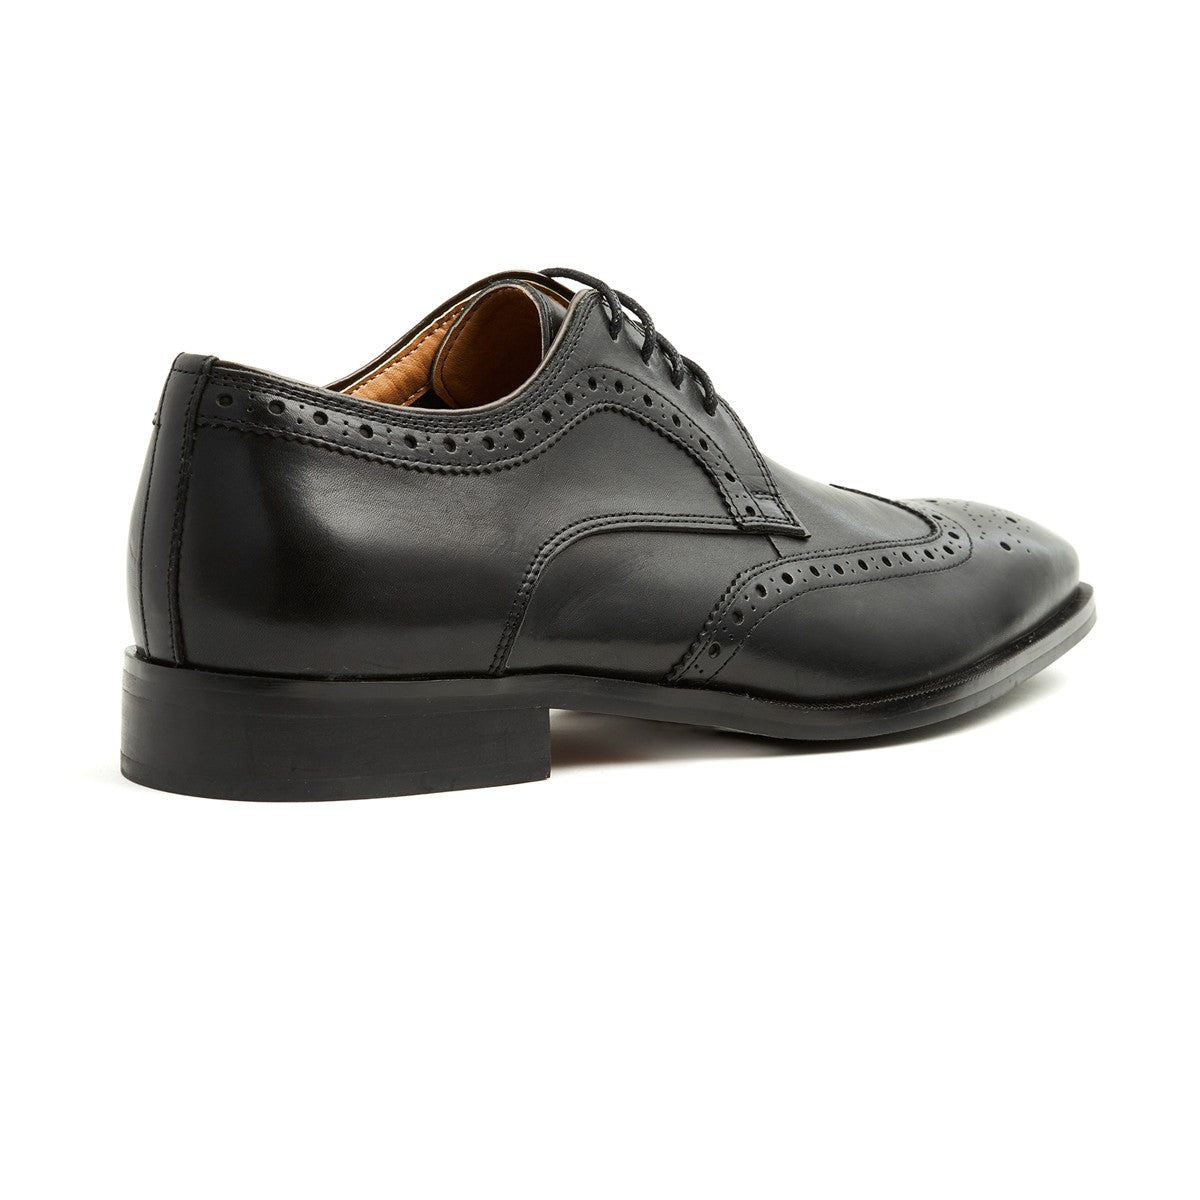 Mens black leather brogue lace-up derby shoe